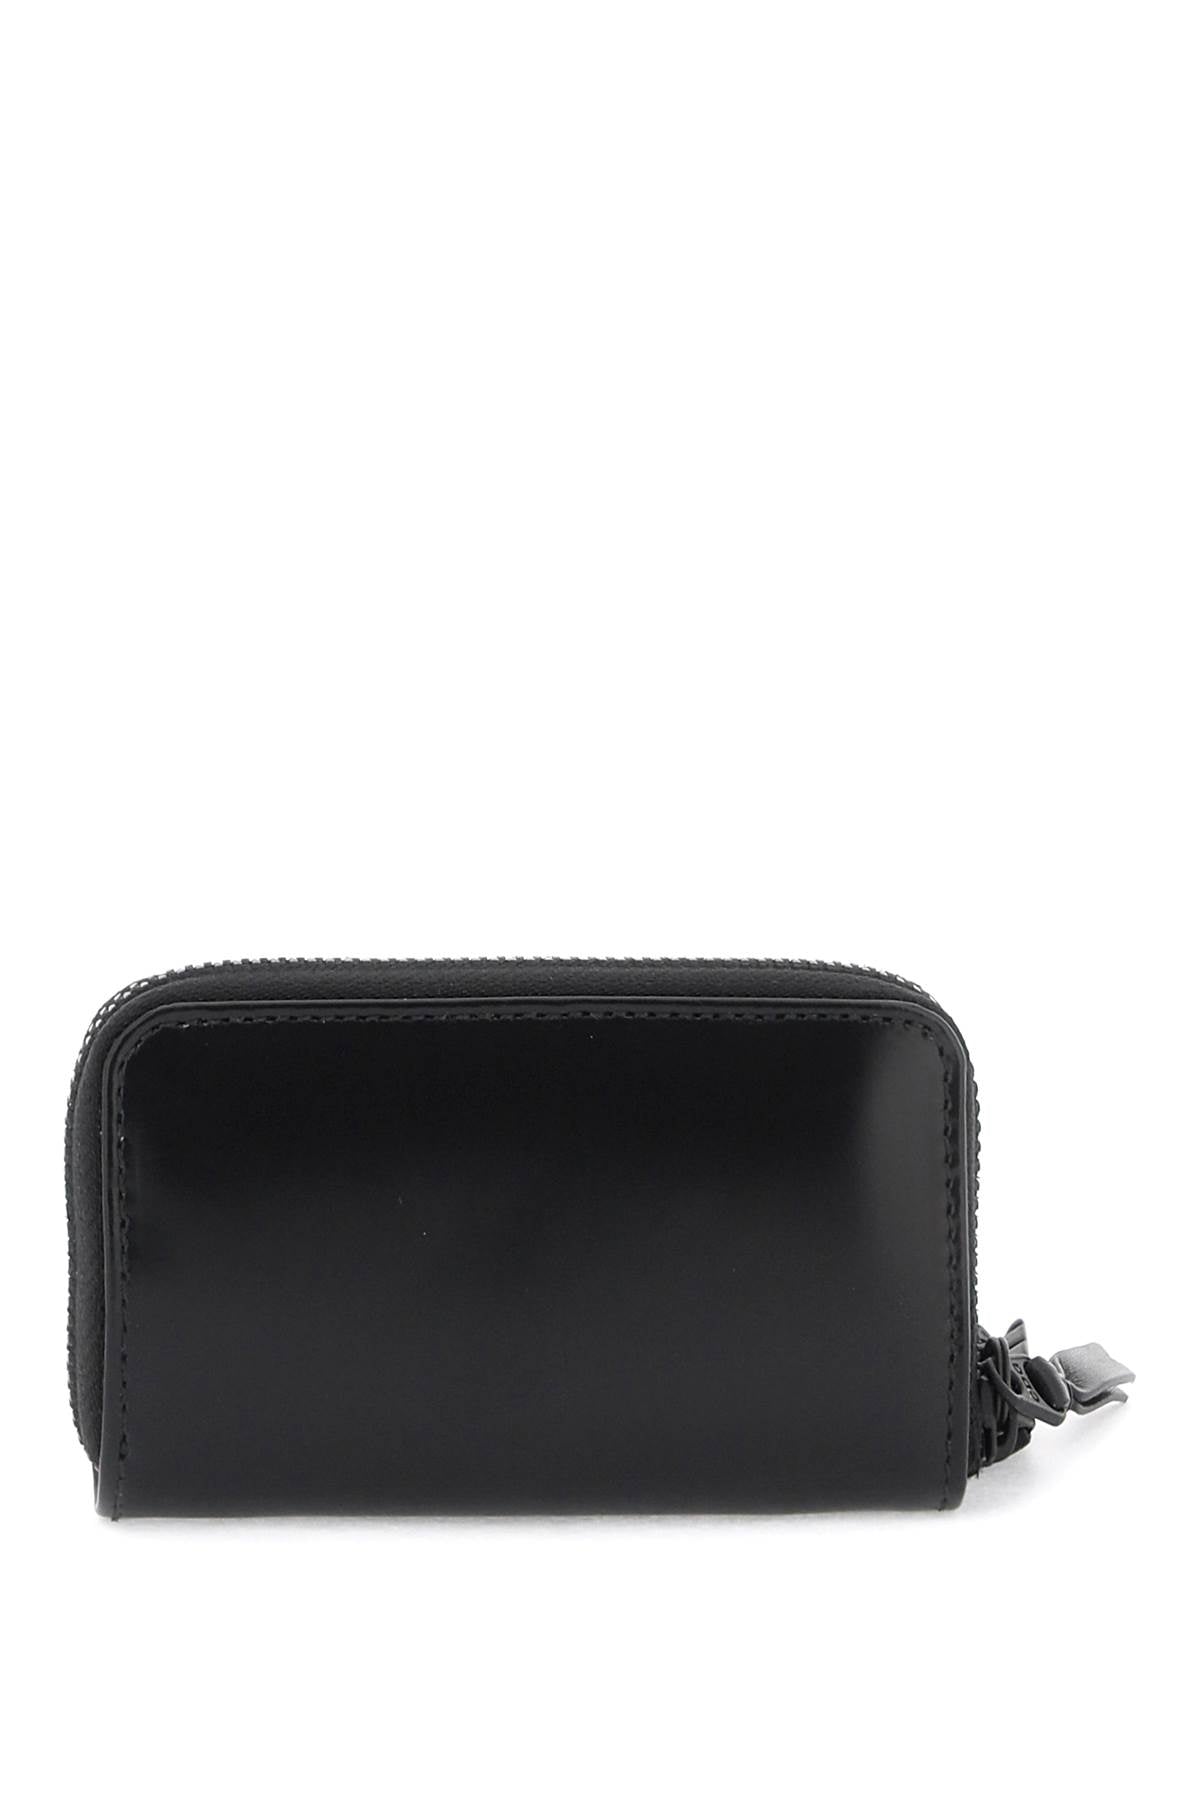 Comme des garcons wallet mini multi-zip wallet with-2